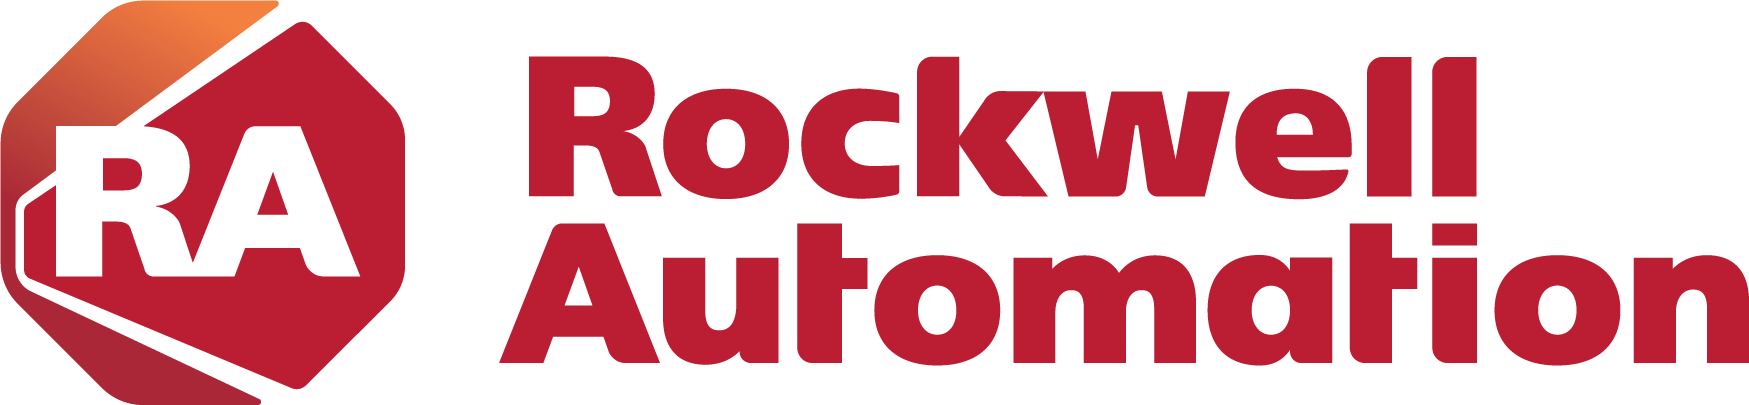 Rockwell Automation authorized distributor logo.